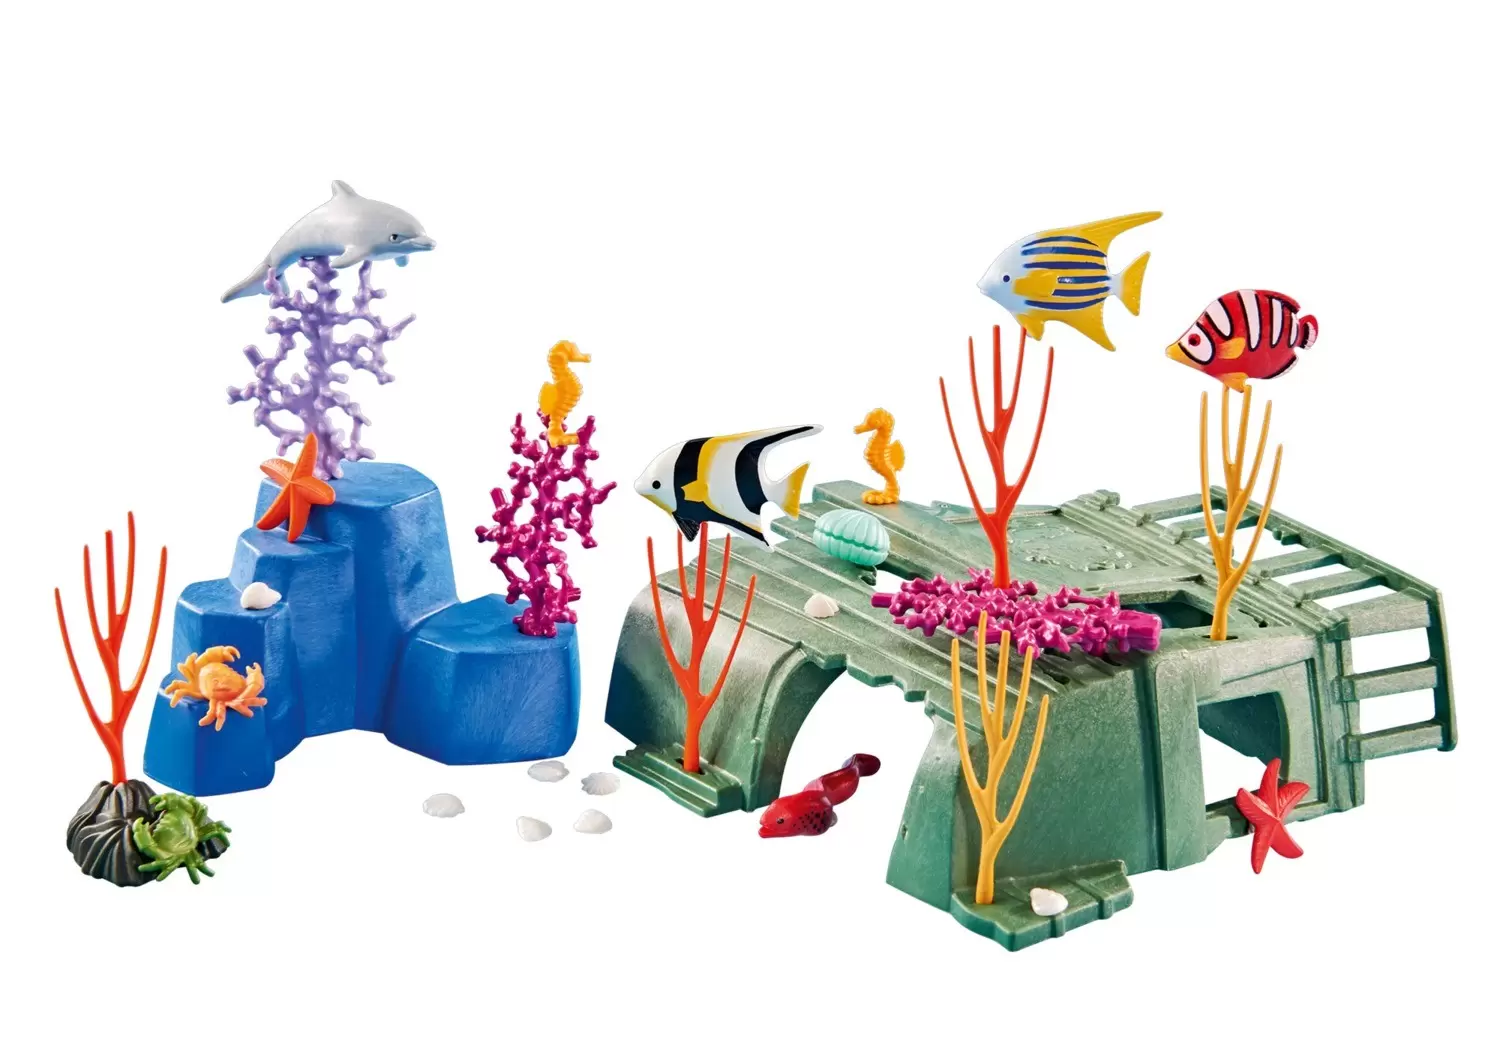 Playmobil underwater world - Coral reef with marine animals